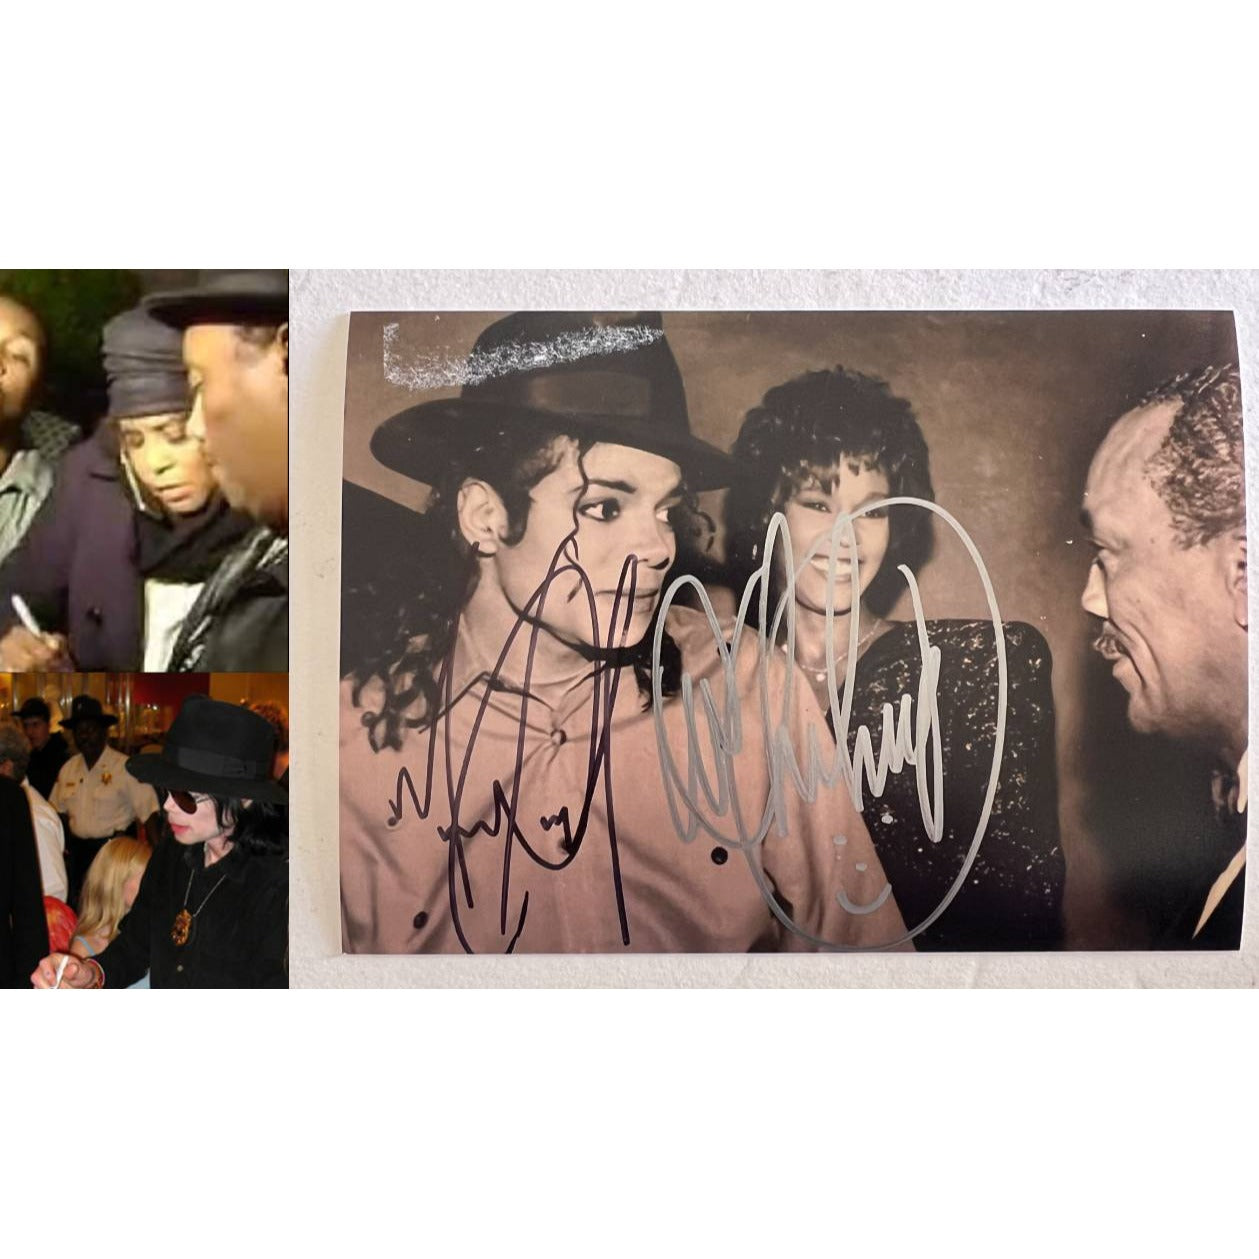 Michael Jackson and Whitney Houston 5x7 photo signed with proof